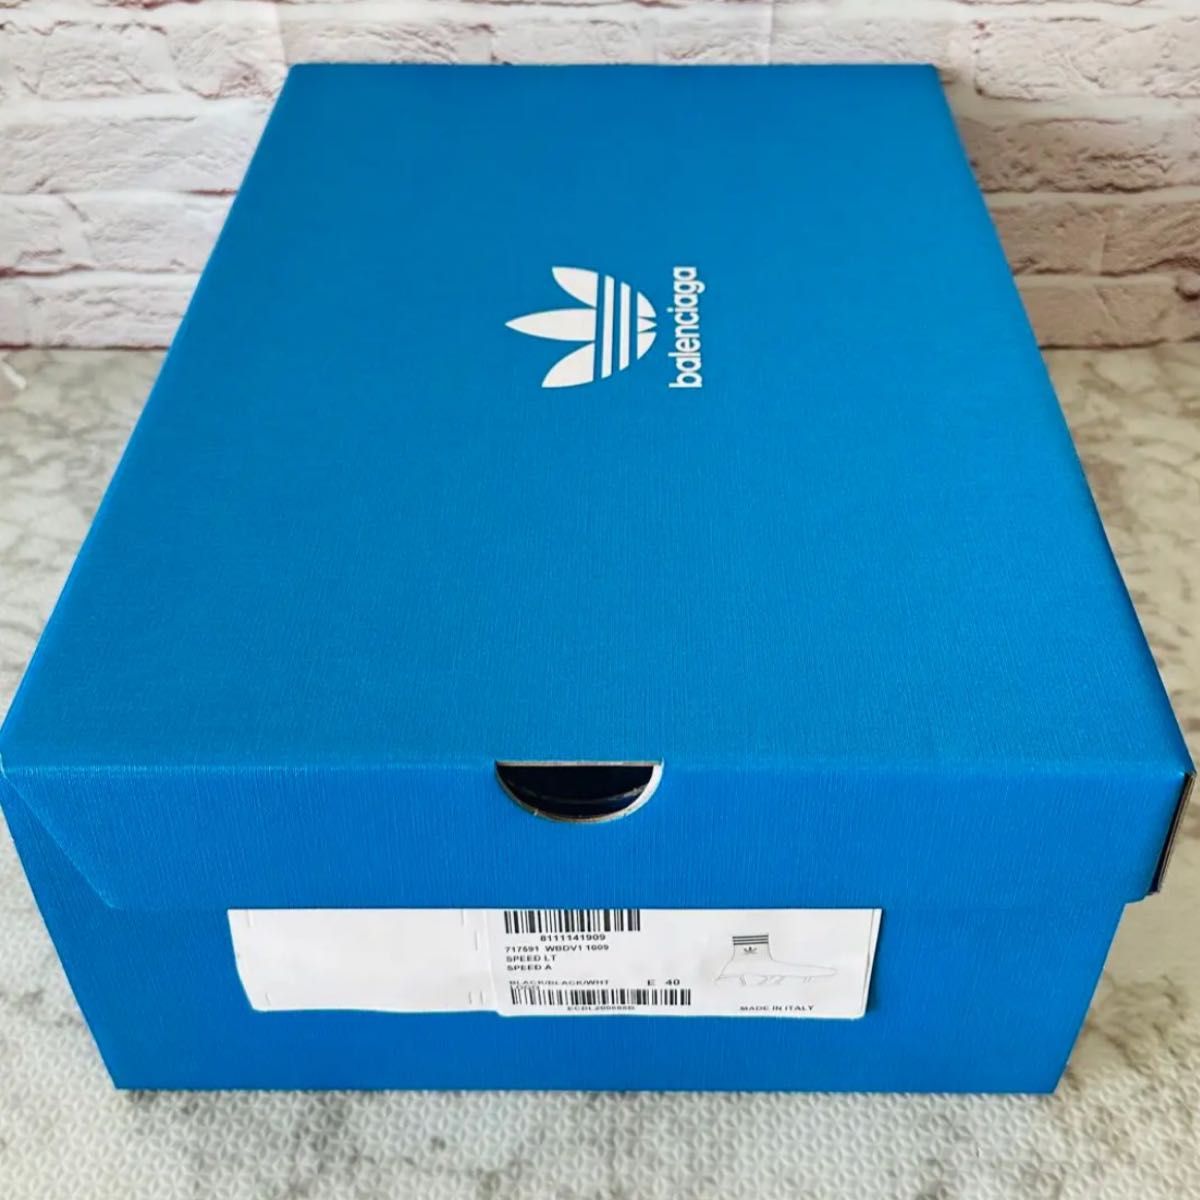 Balenciaga × adidas スピードトレーナー 2.0 サイズ40 23SS 未使用新品